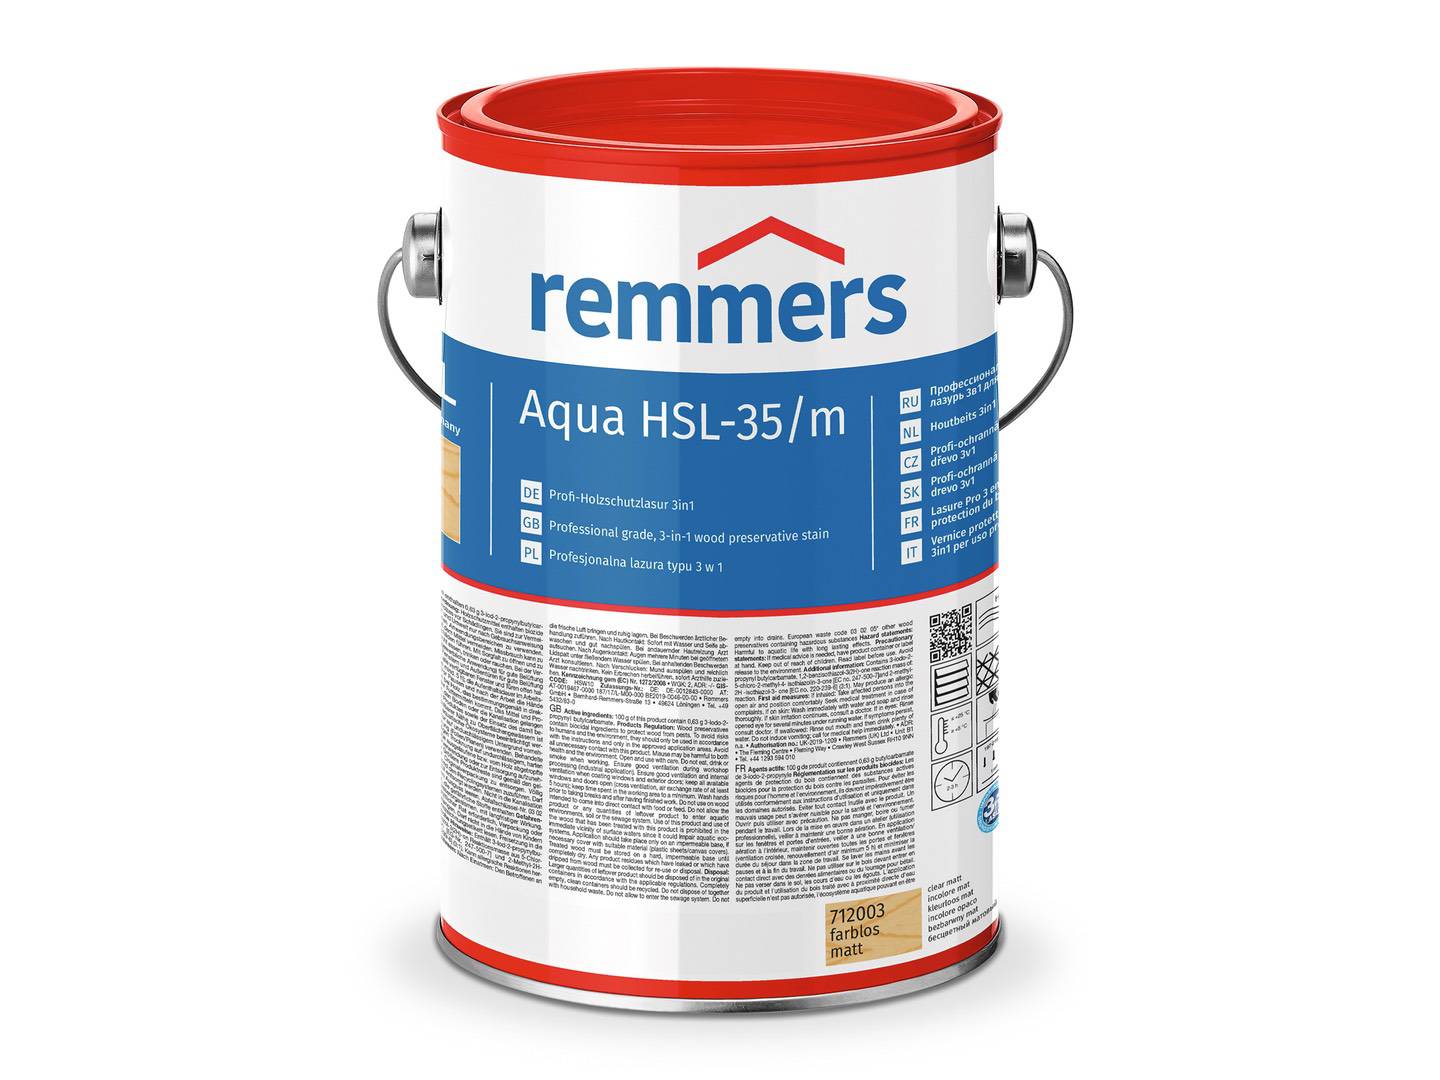 REMMERS Aqua HSL-35/m-Profi-Holzschutz-Lasur 3in1 silbergrau (RC-970) 5 l